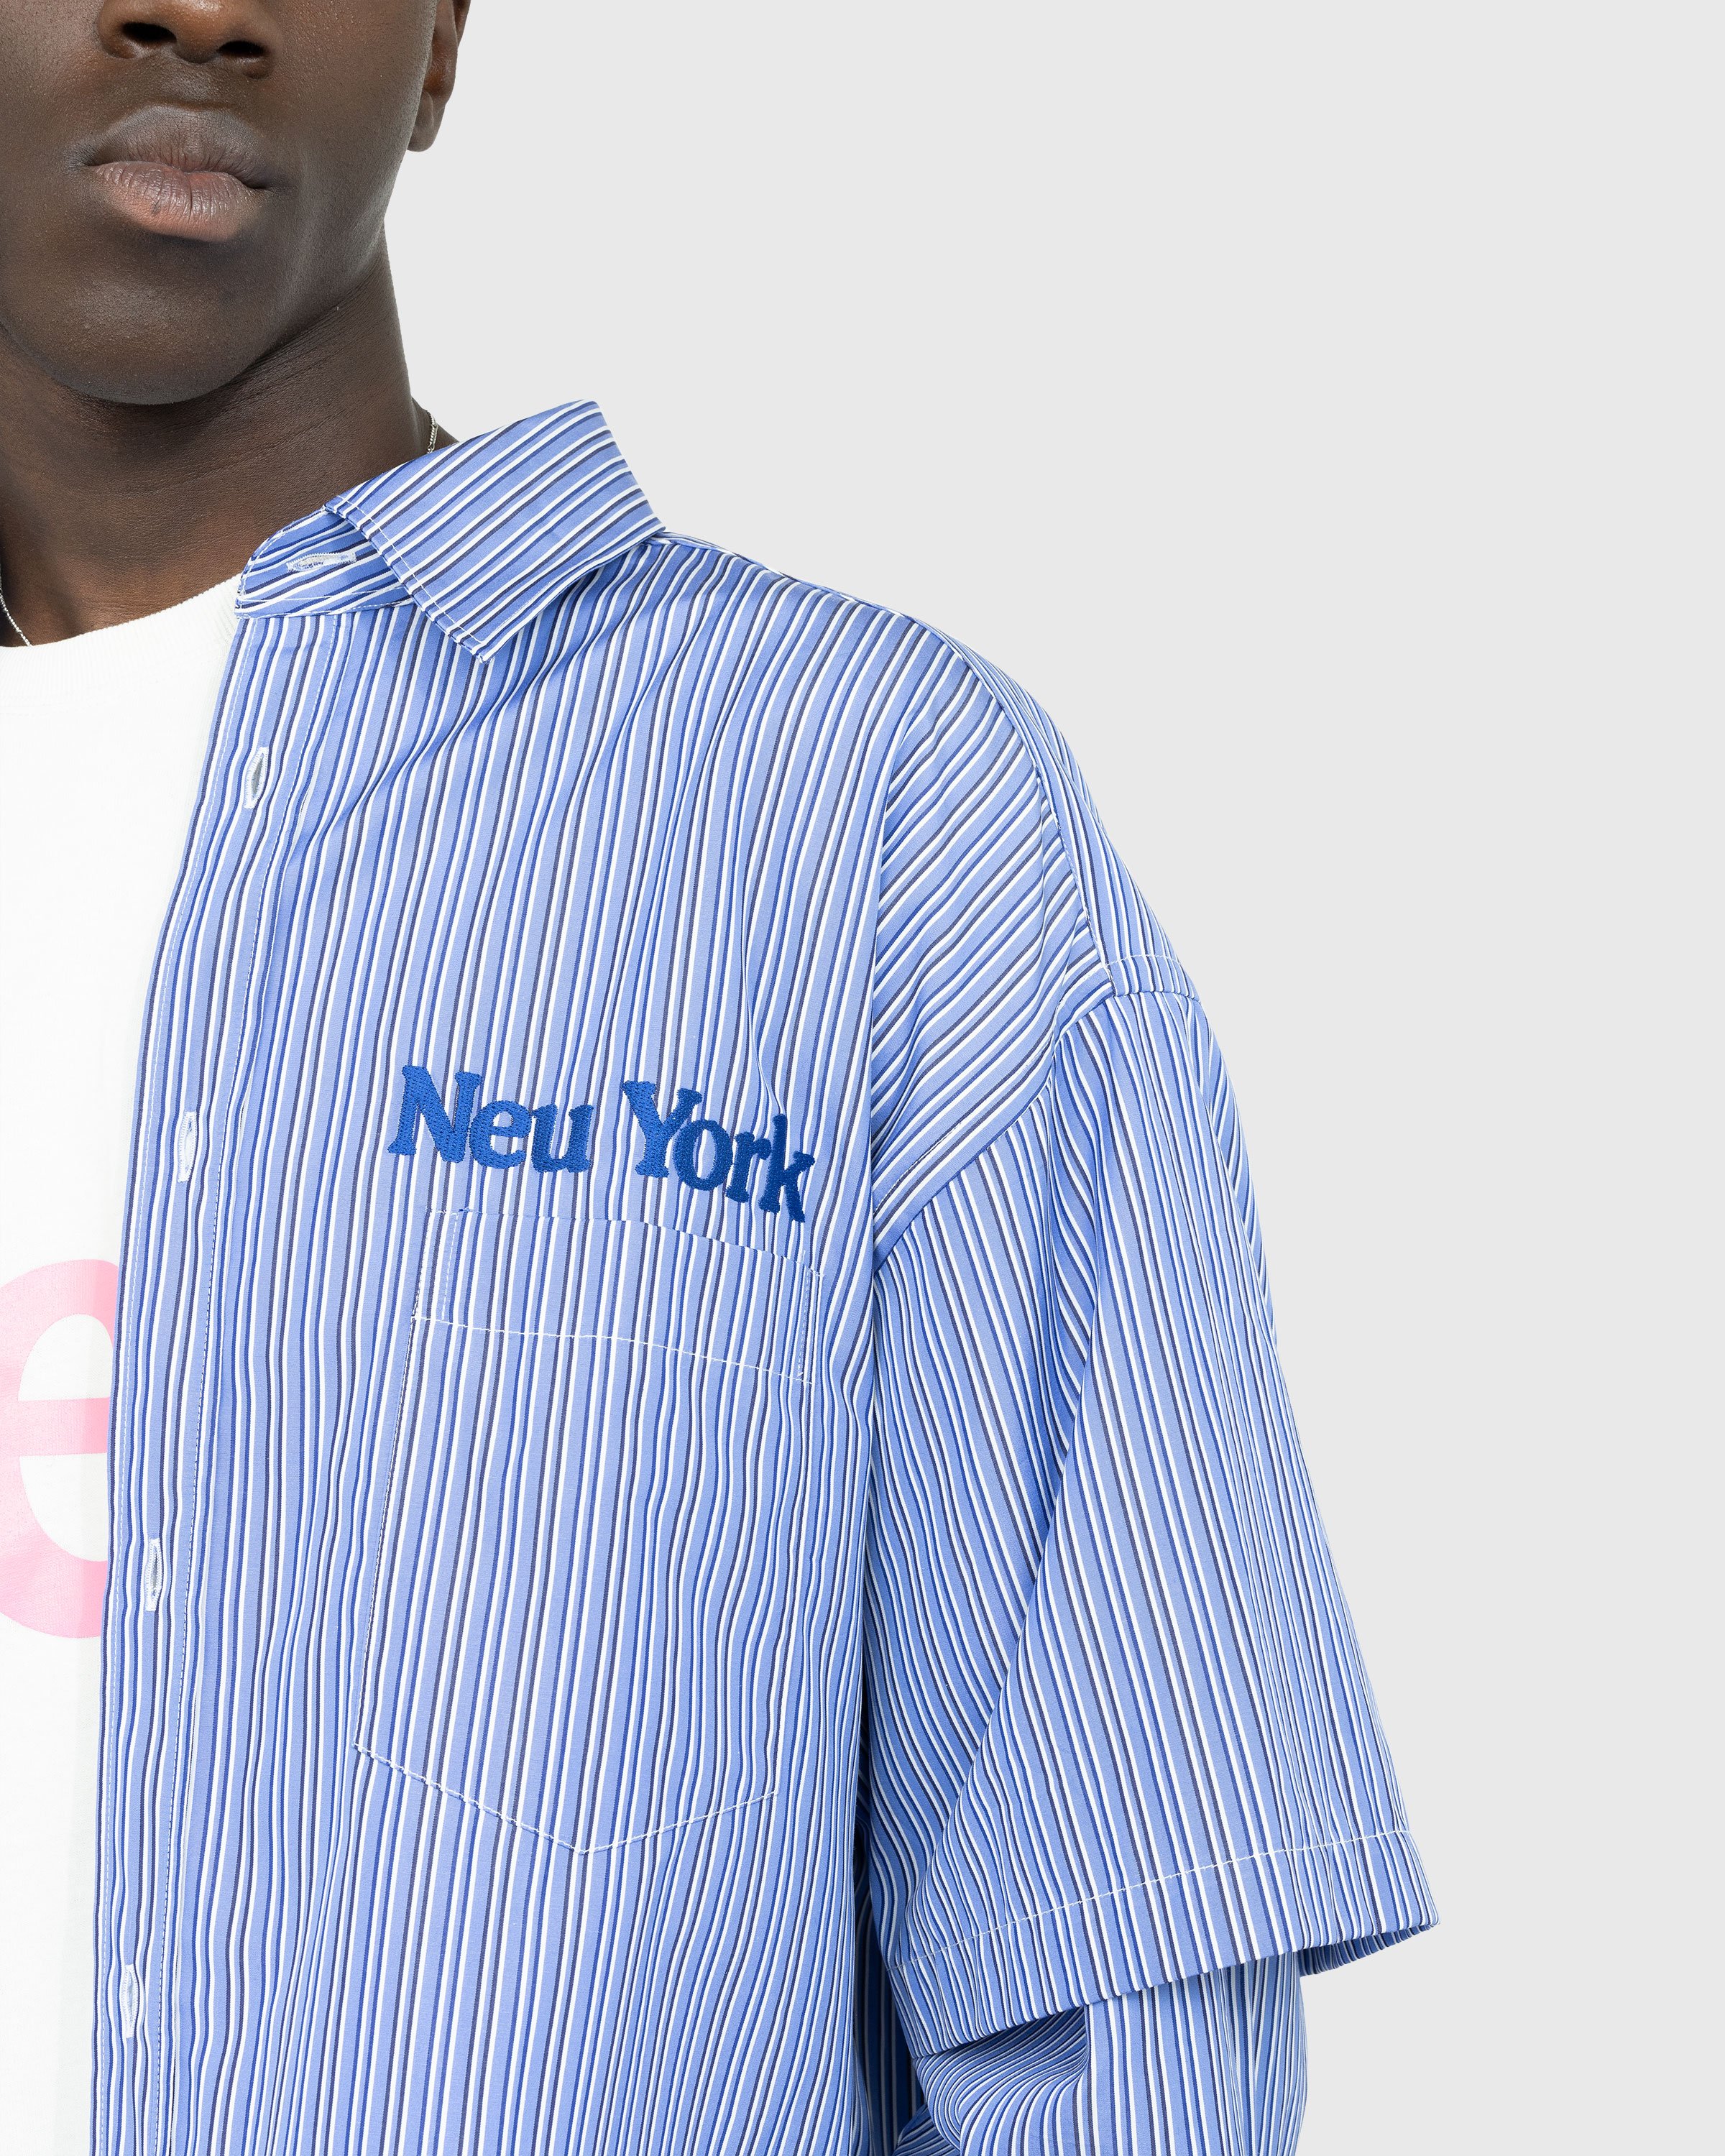 Highsnobiety x Le Père - "Neu York Neu York" Double Sleeve Shirt - Clothing - Blue - Image 5